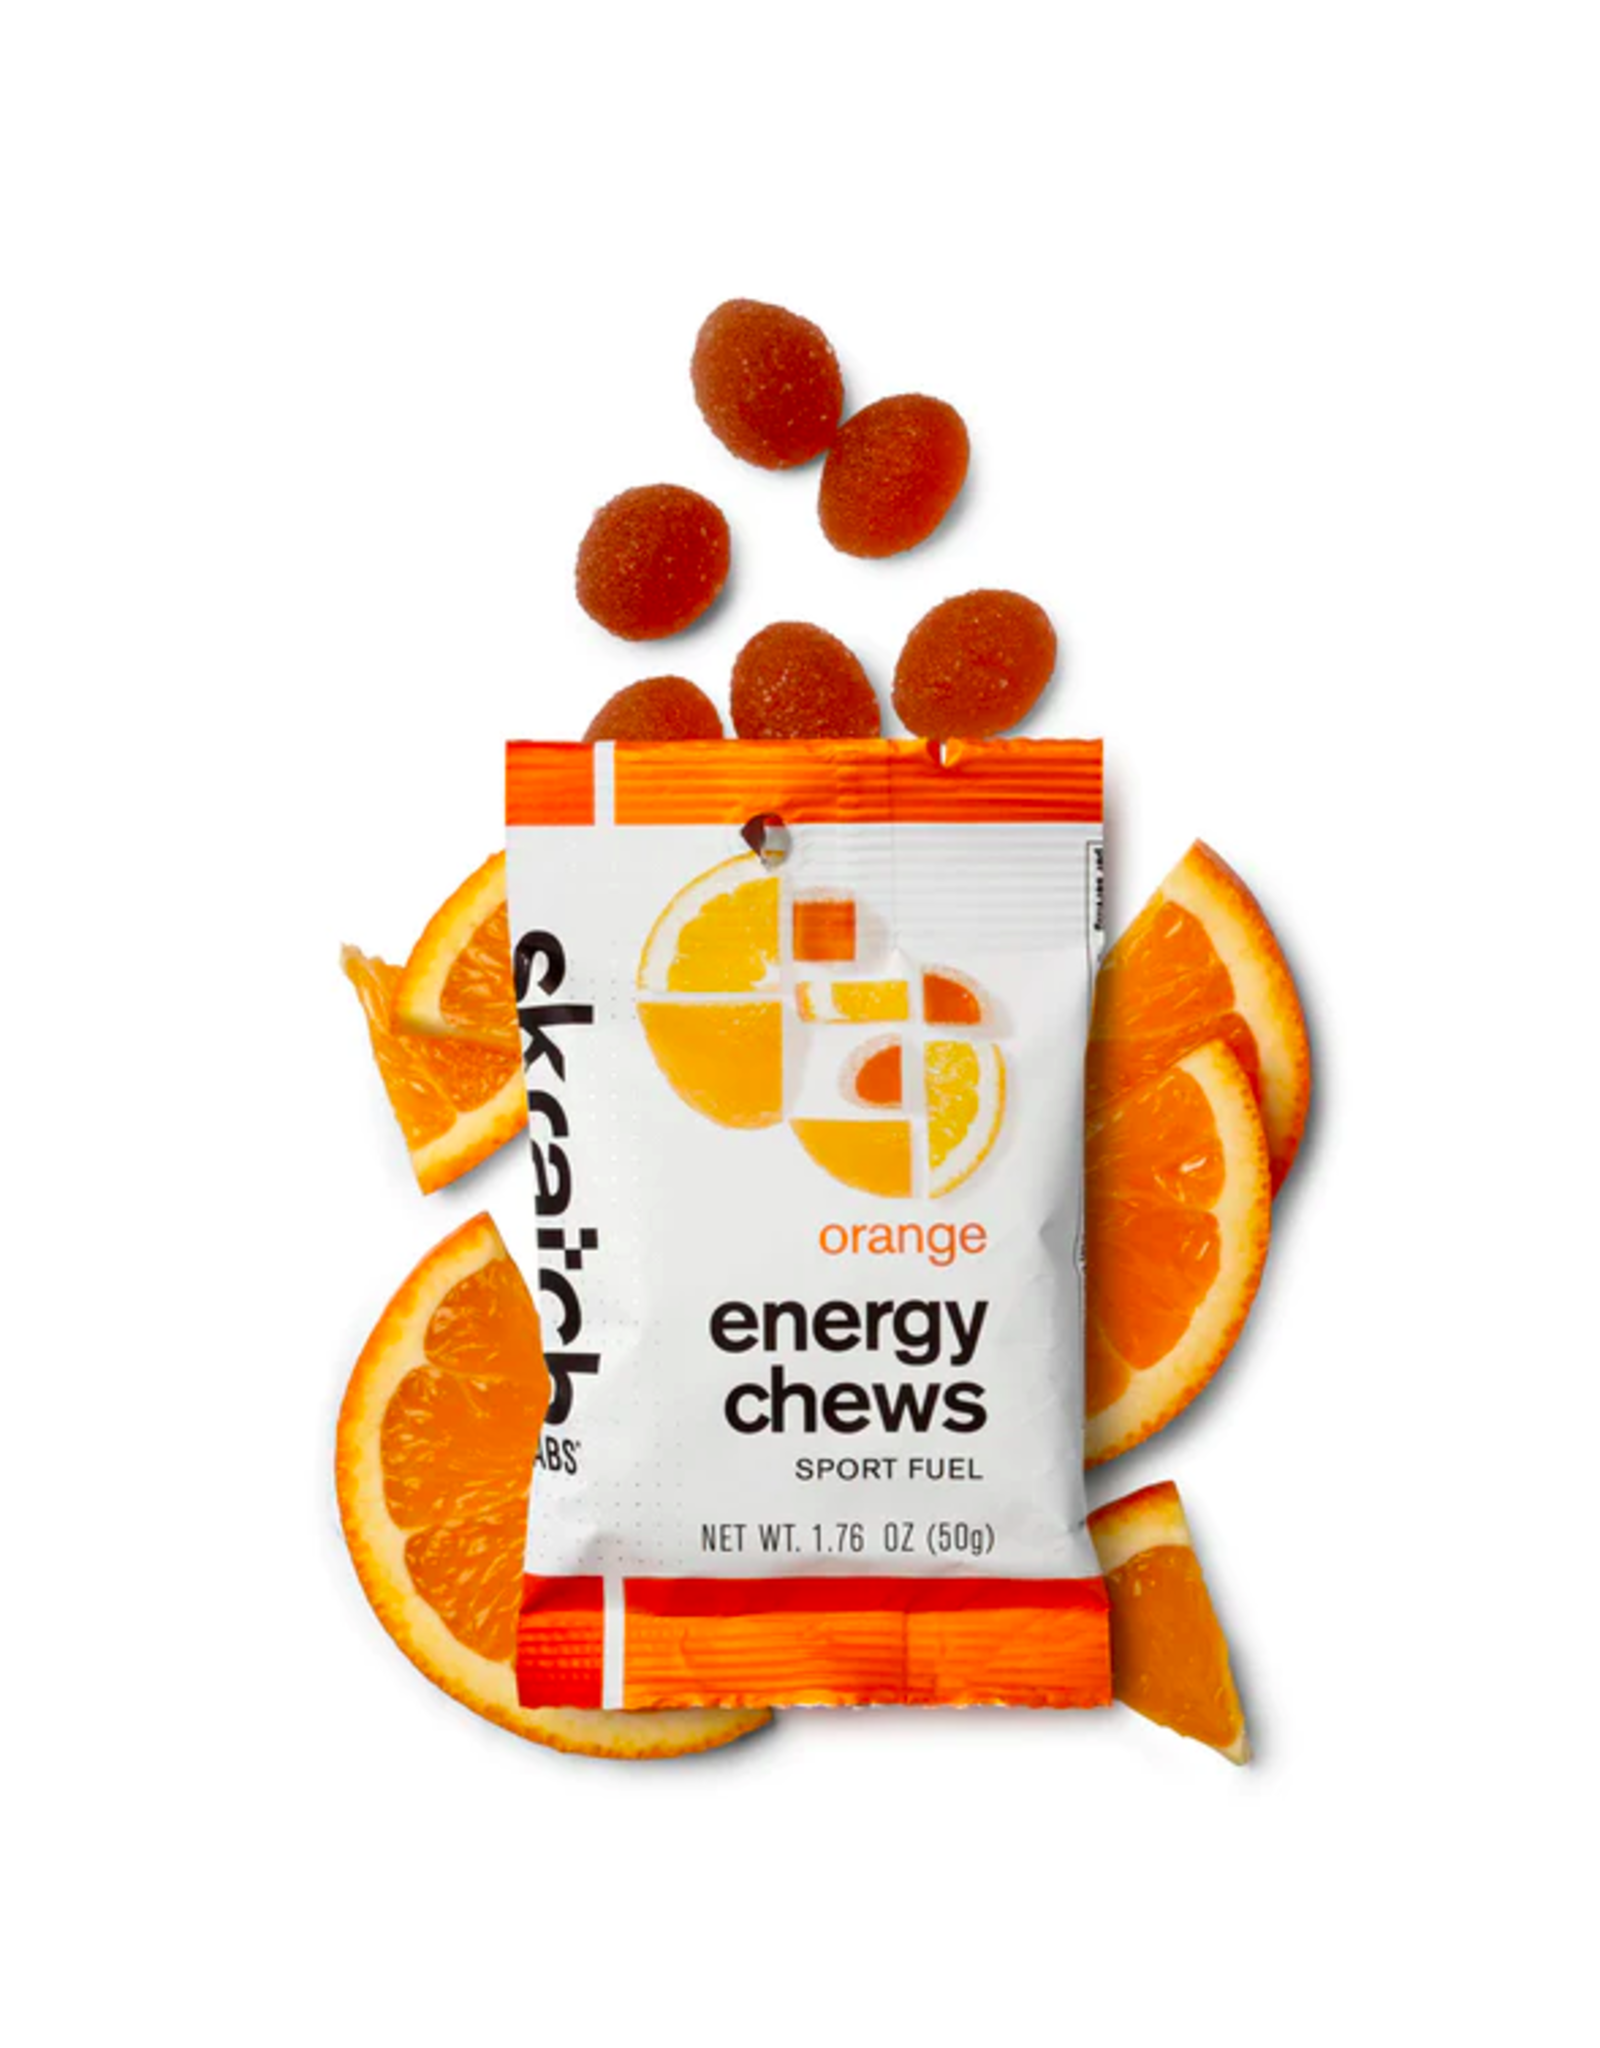 Skratch Energy Chews